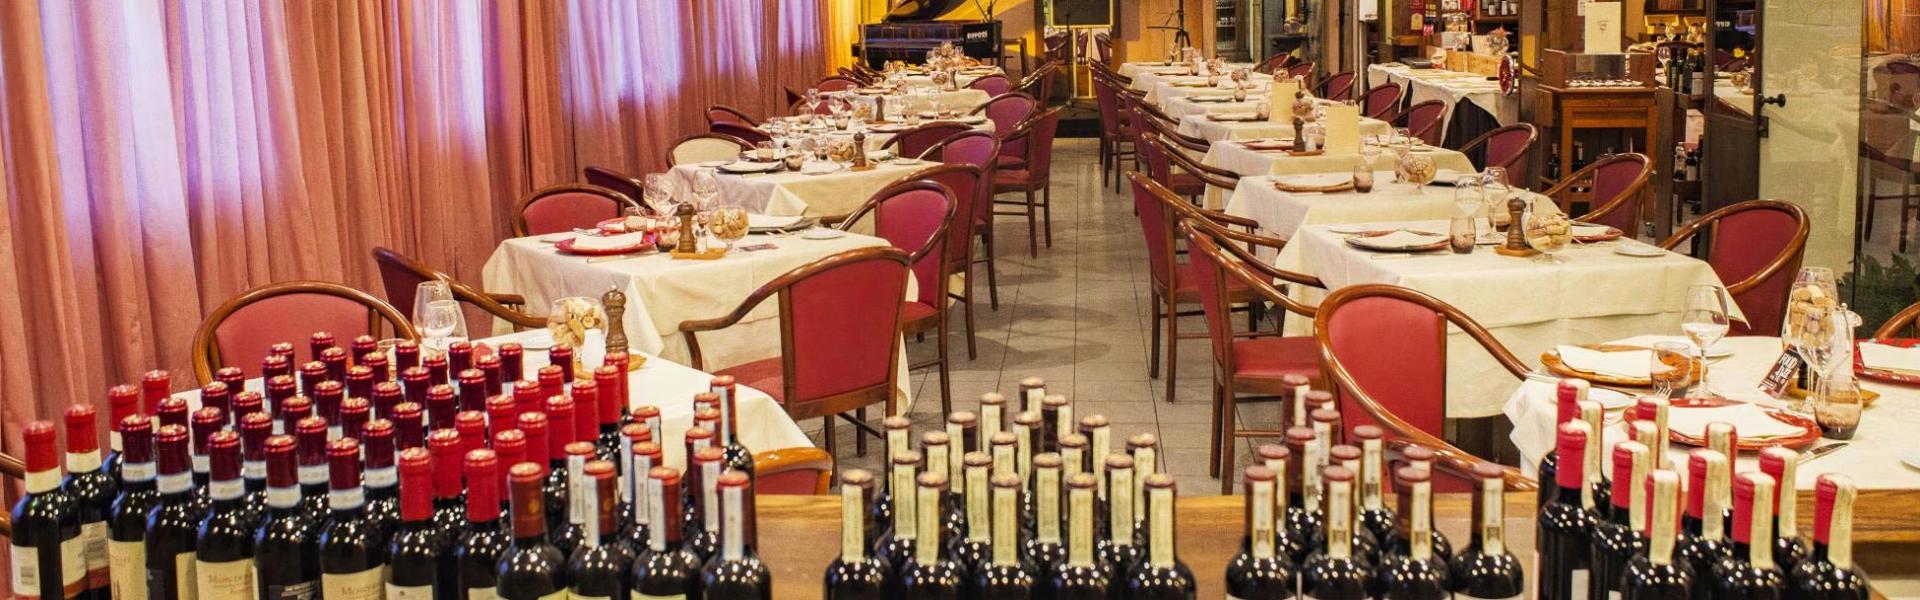 hotelgio it menu-ristorante 011